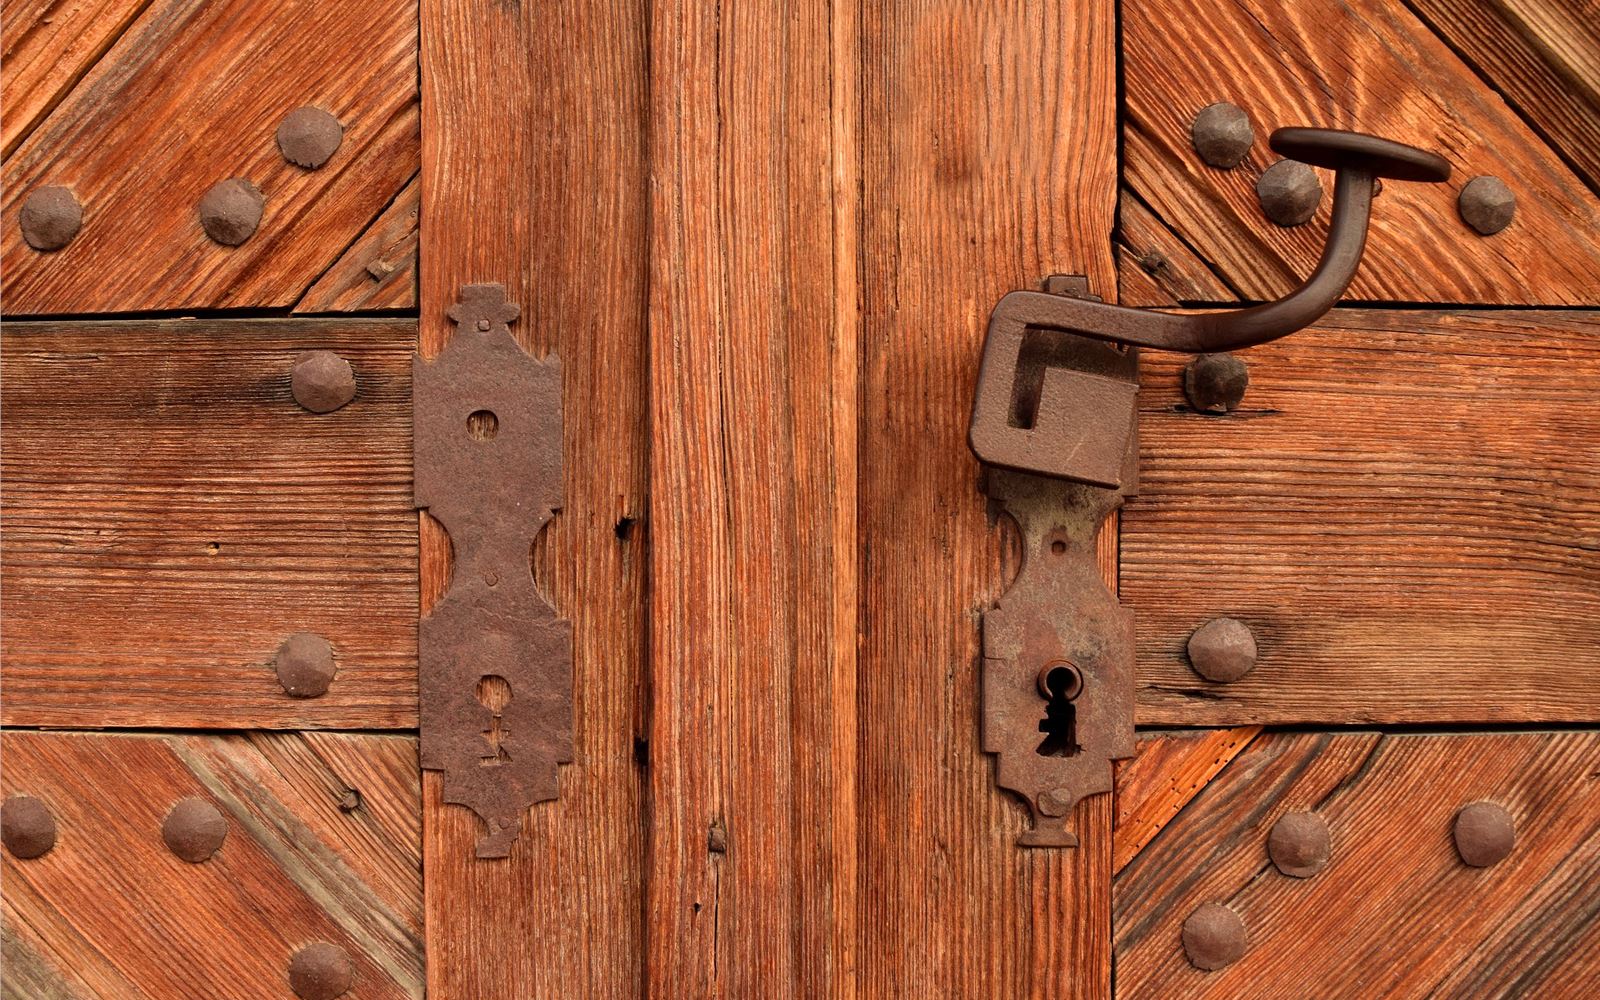 Locksmith Genius: The Key and the Gate